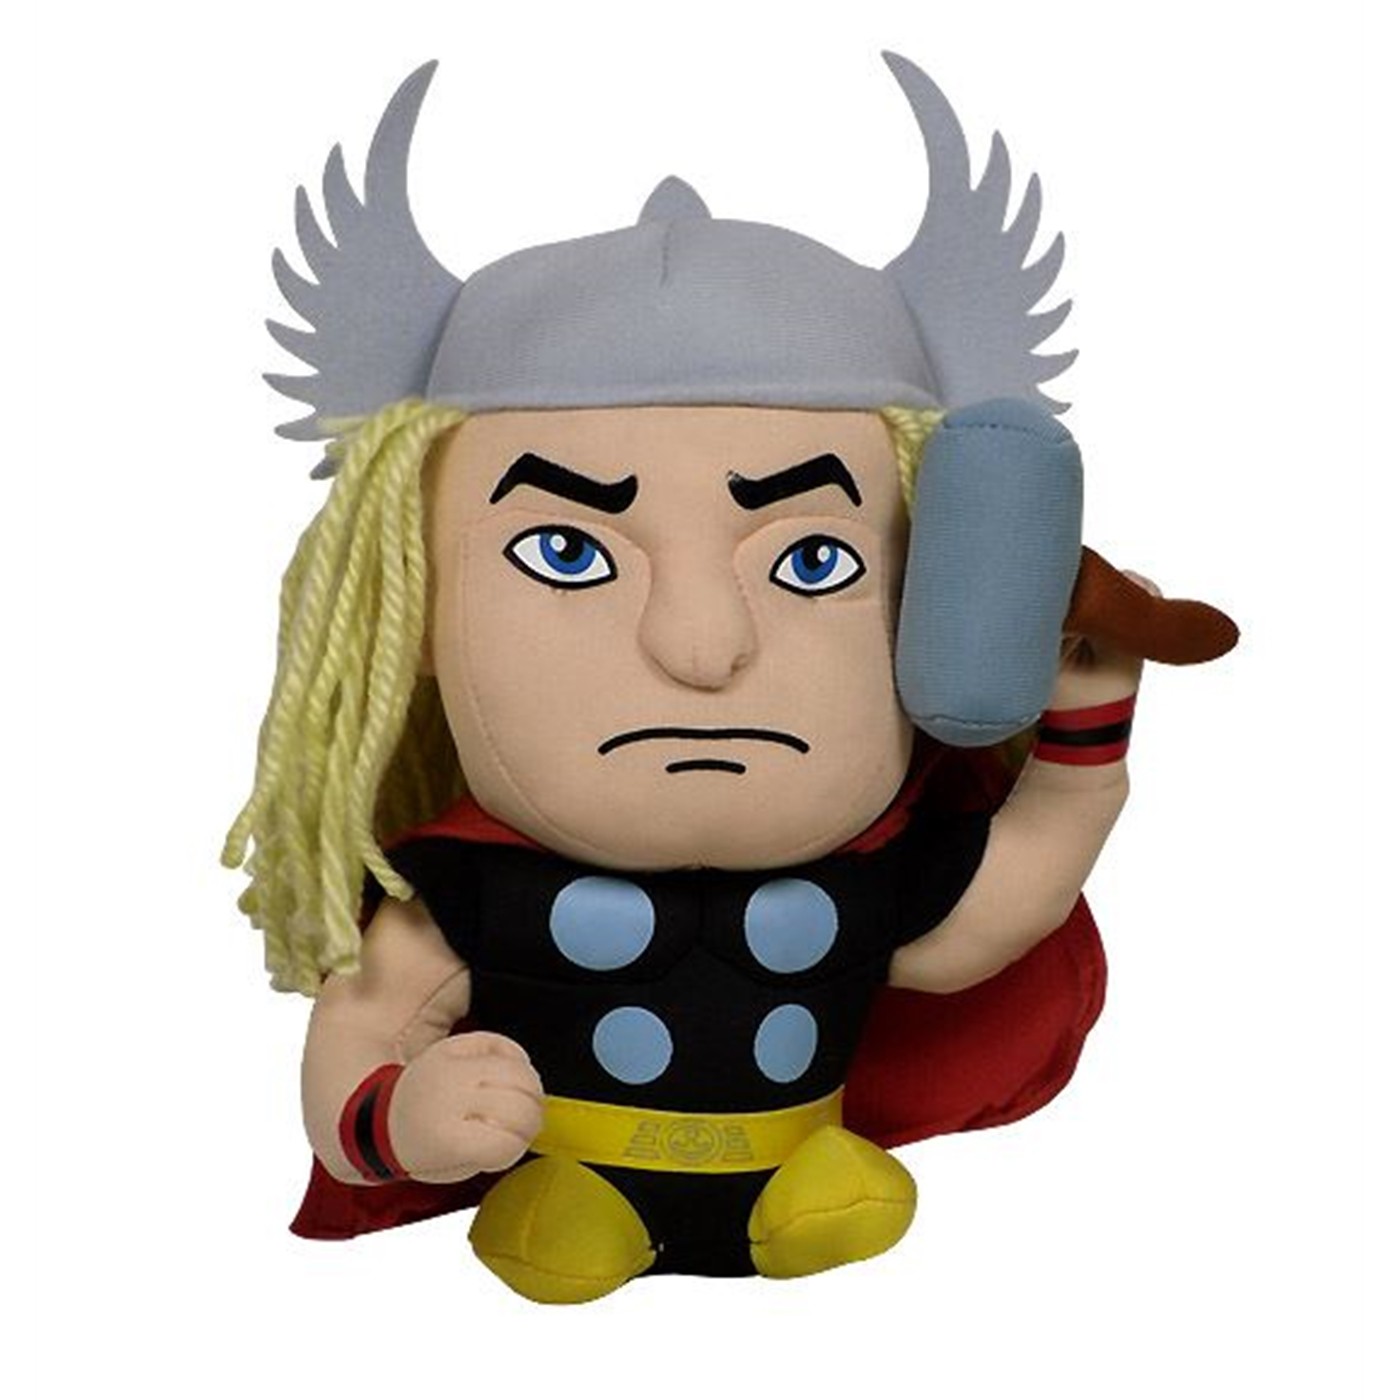 Thor Super Deformed Plush Toy